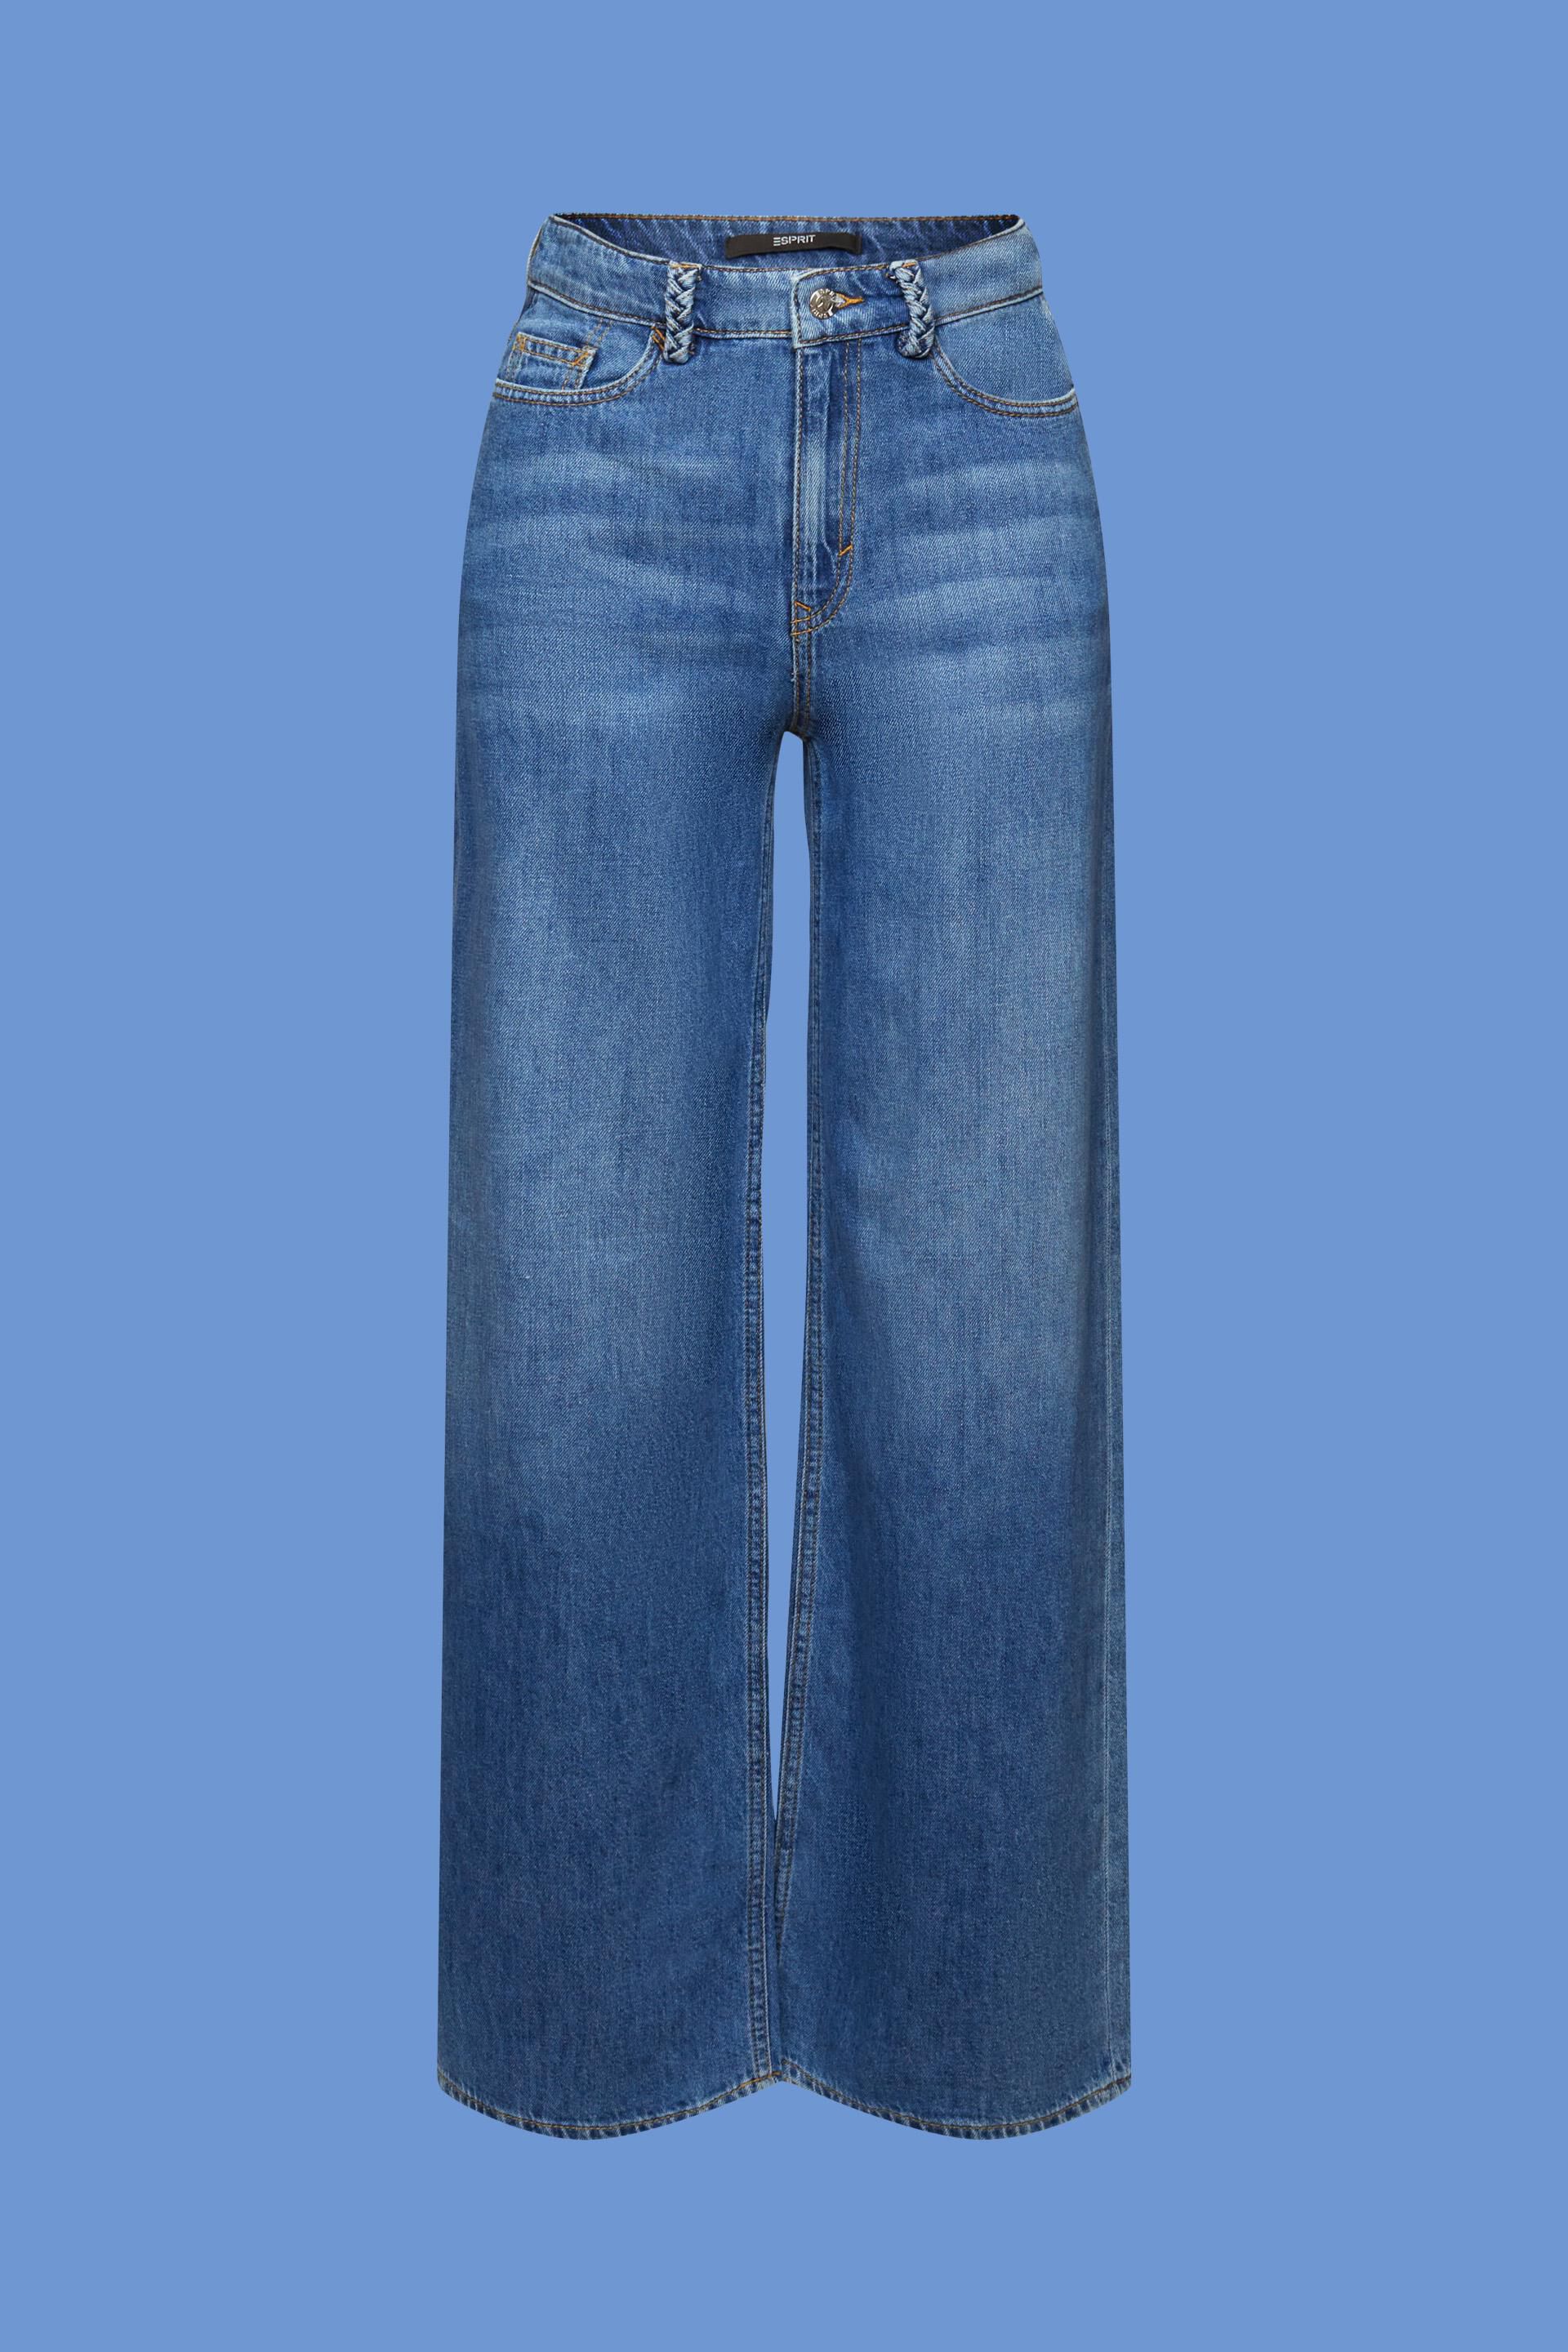 Japanese 14oz Medium Wash Indigo Stretch Jeans - Custom Fit Pants